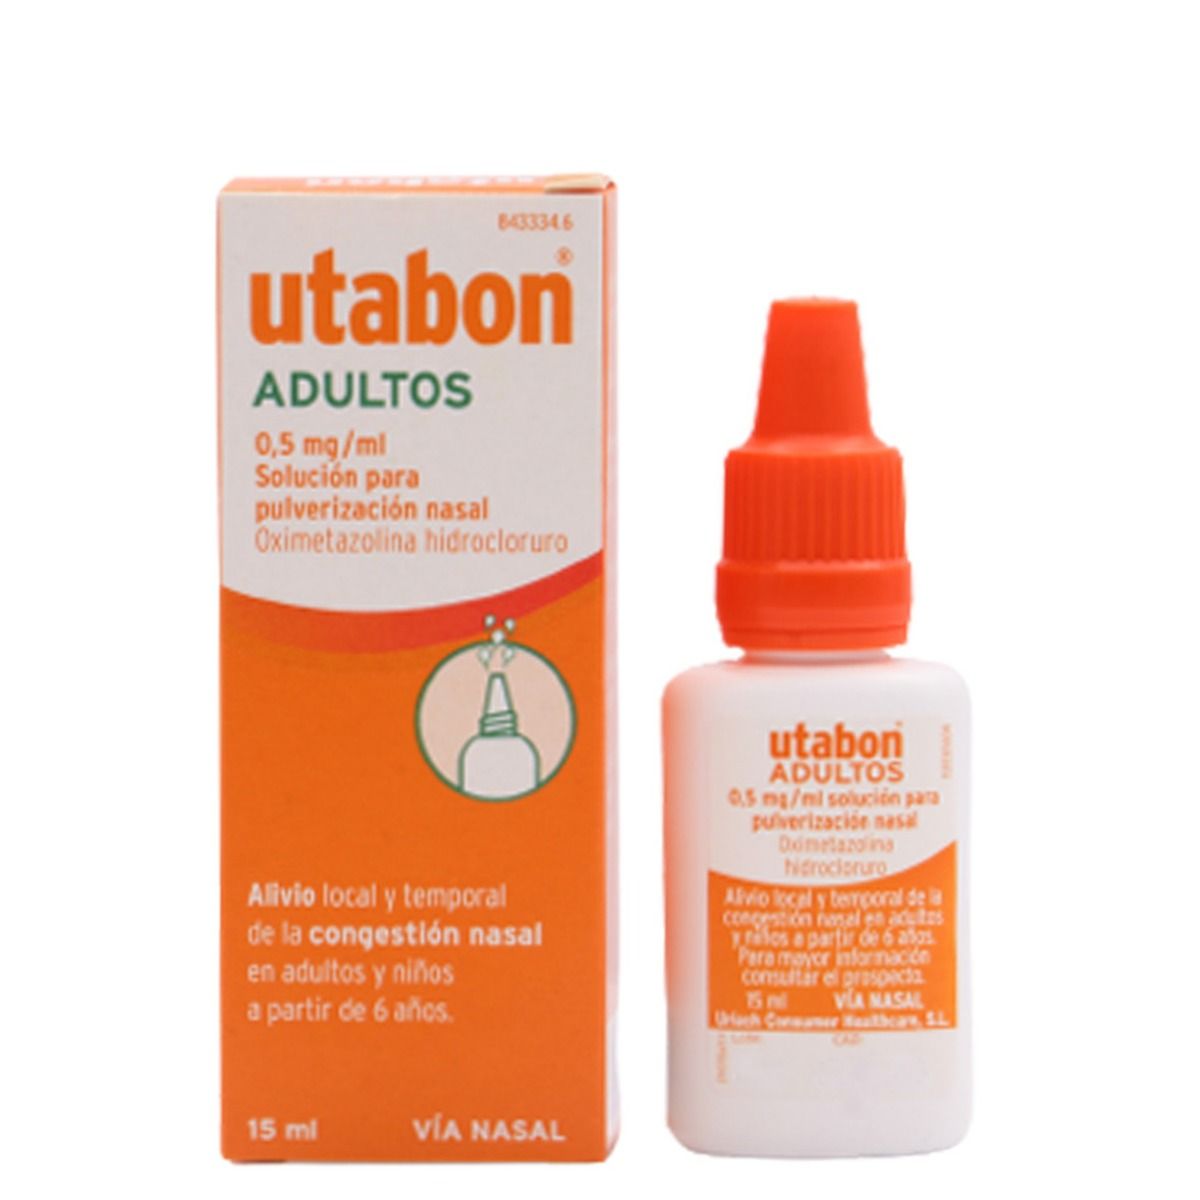 Utabon Adultos Spray Nasal 15ml